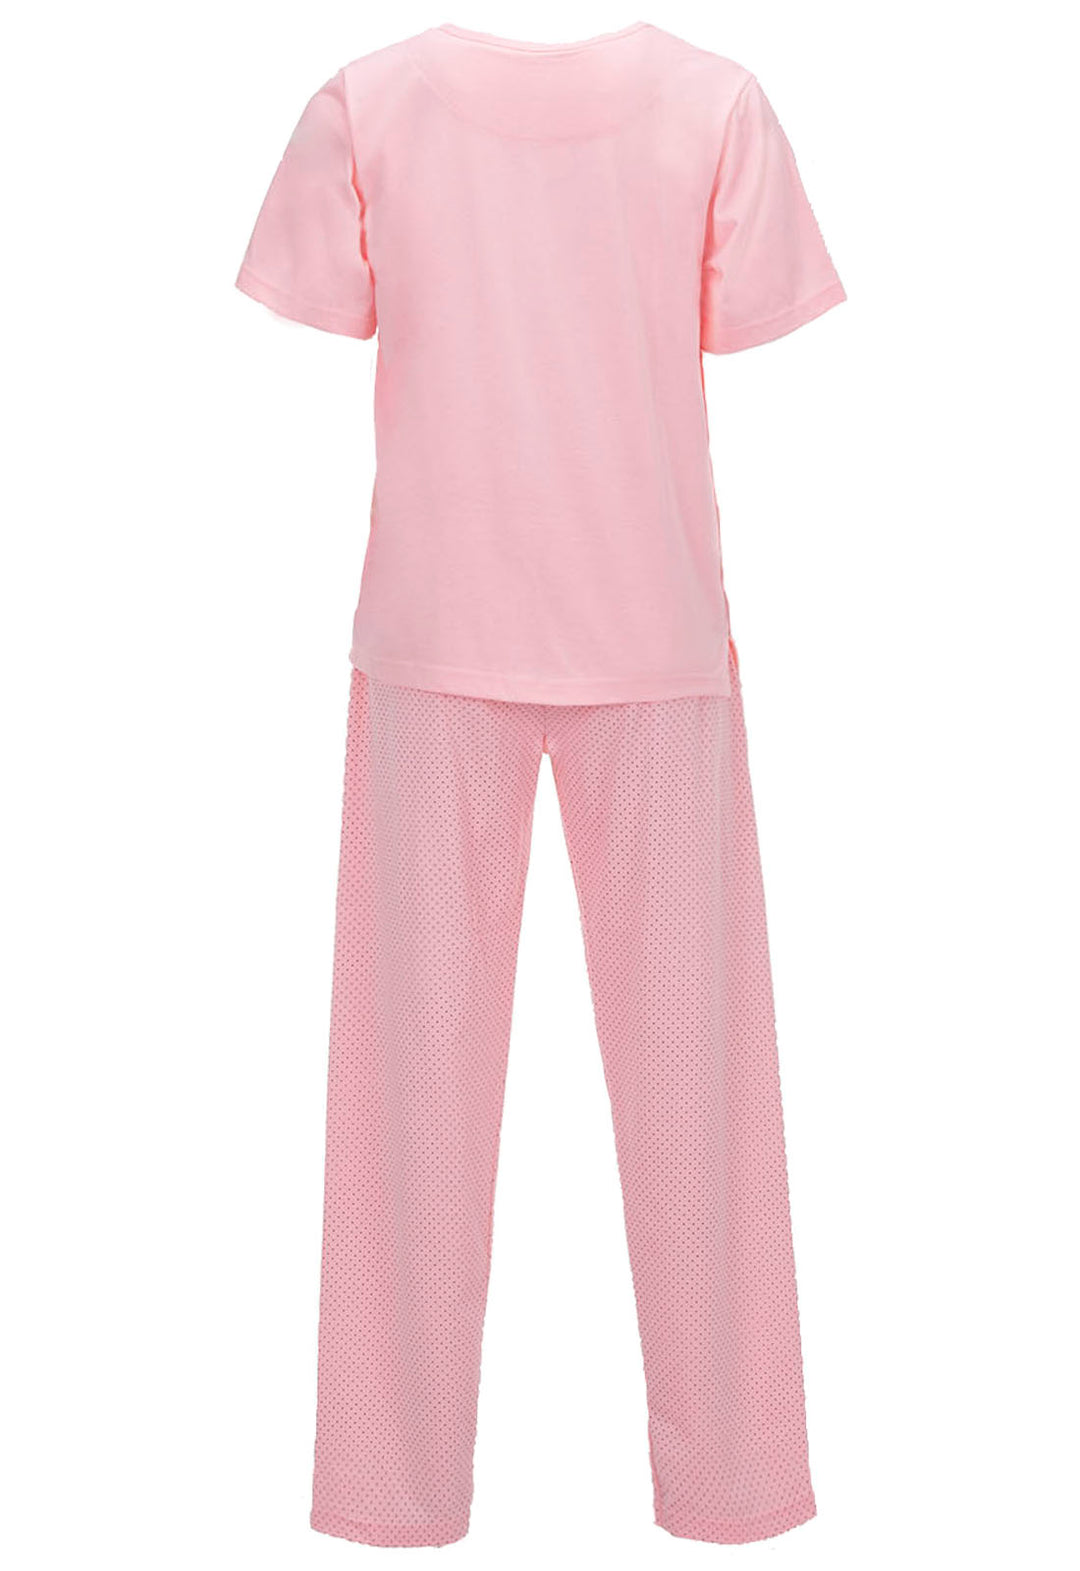 Pyjama Set Kurzarm - Uni Punkte